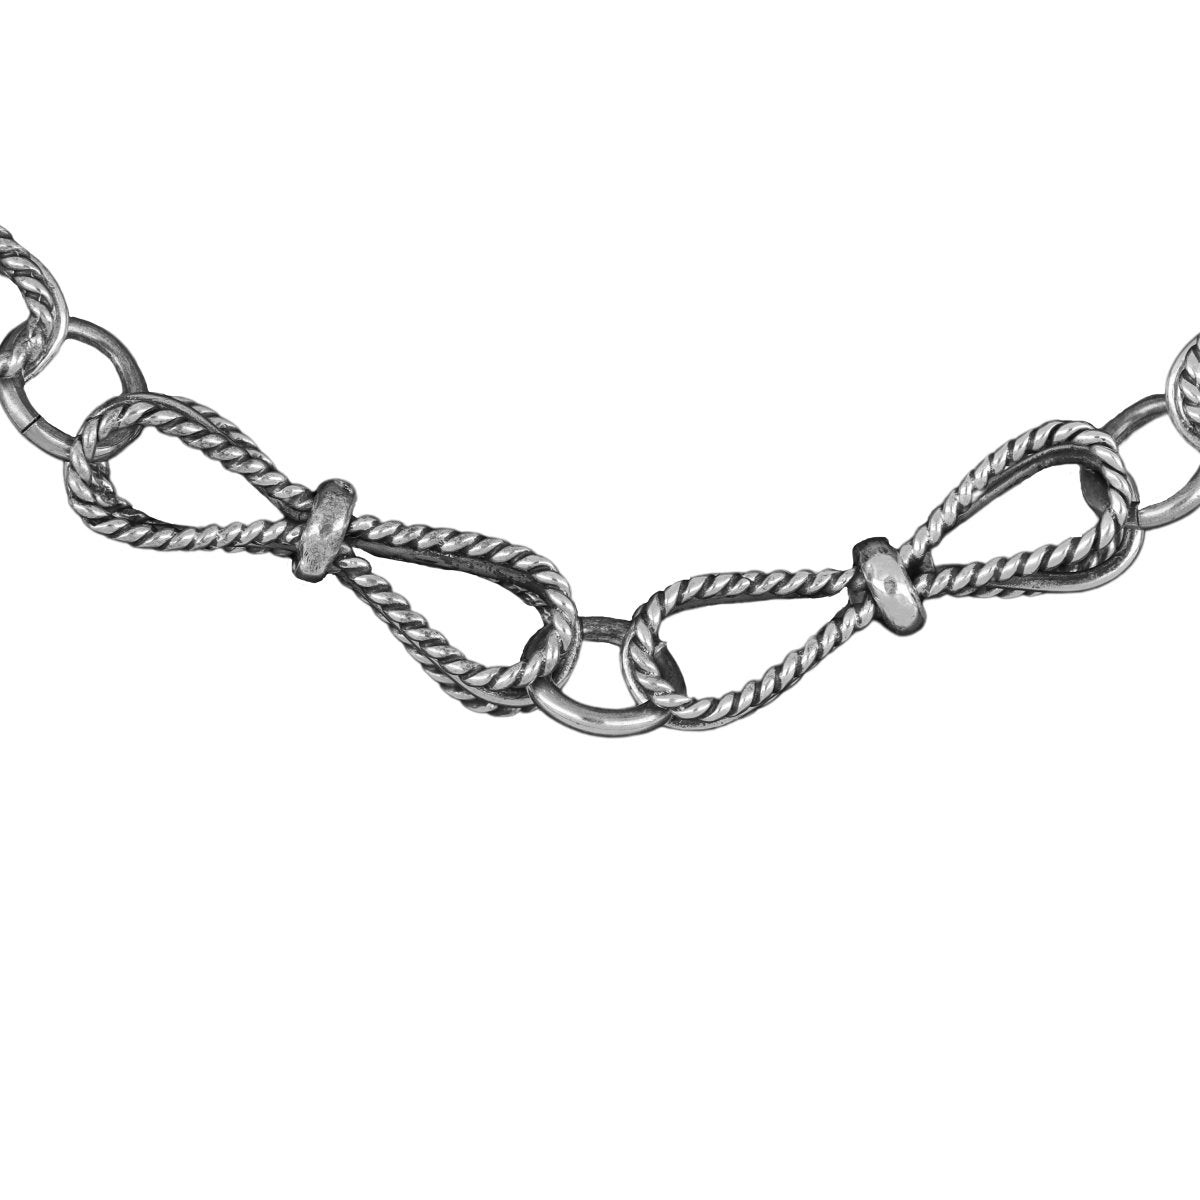 Necklace "Bow" - Pregomesh